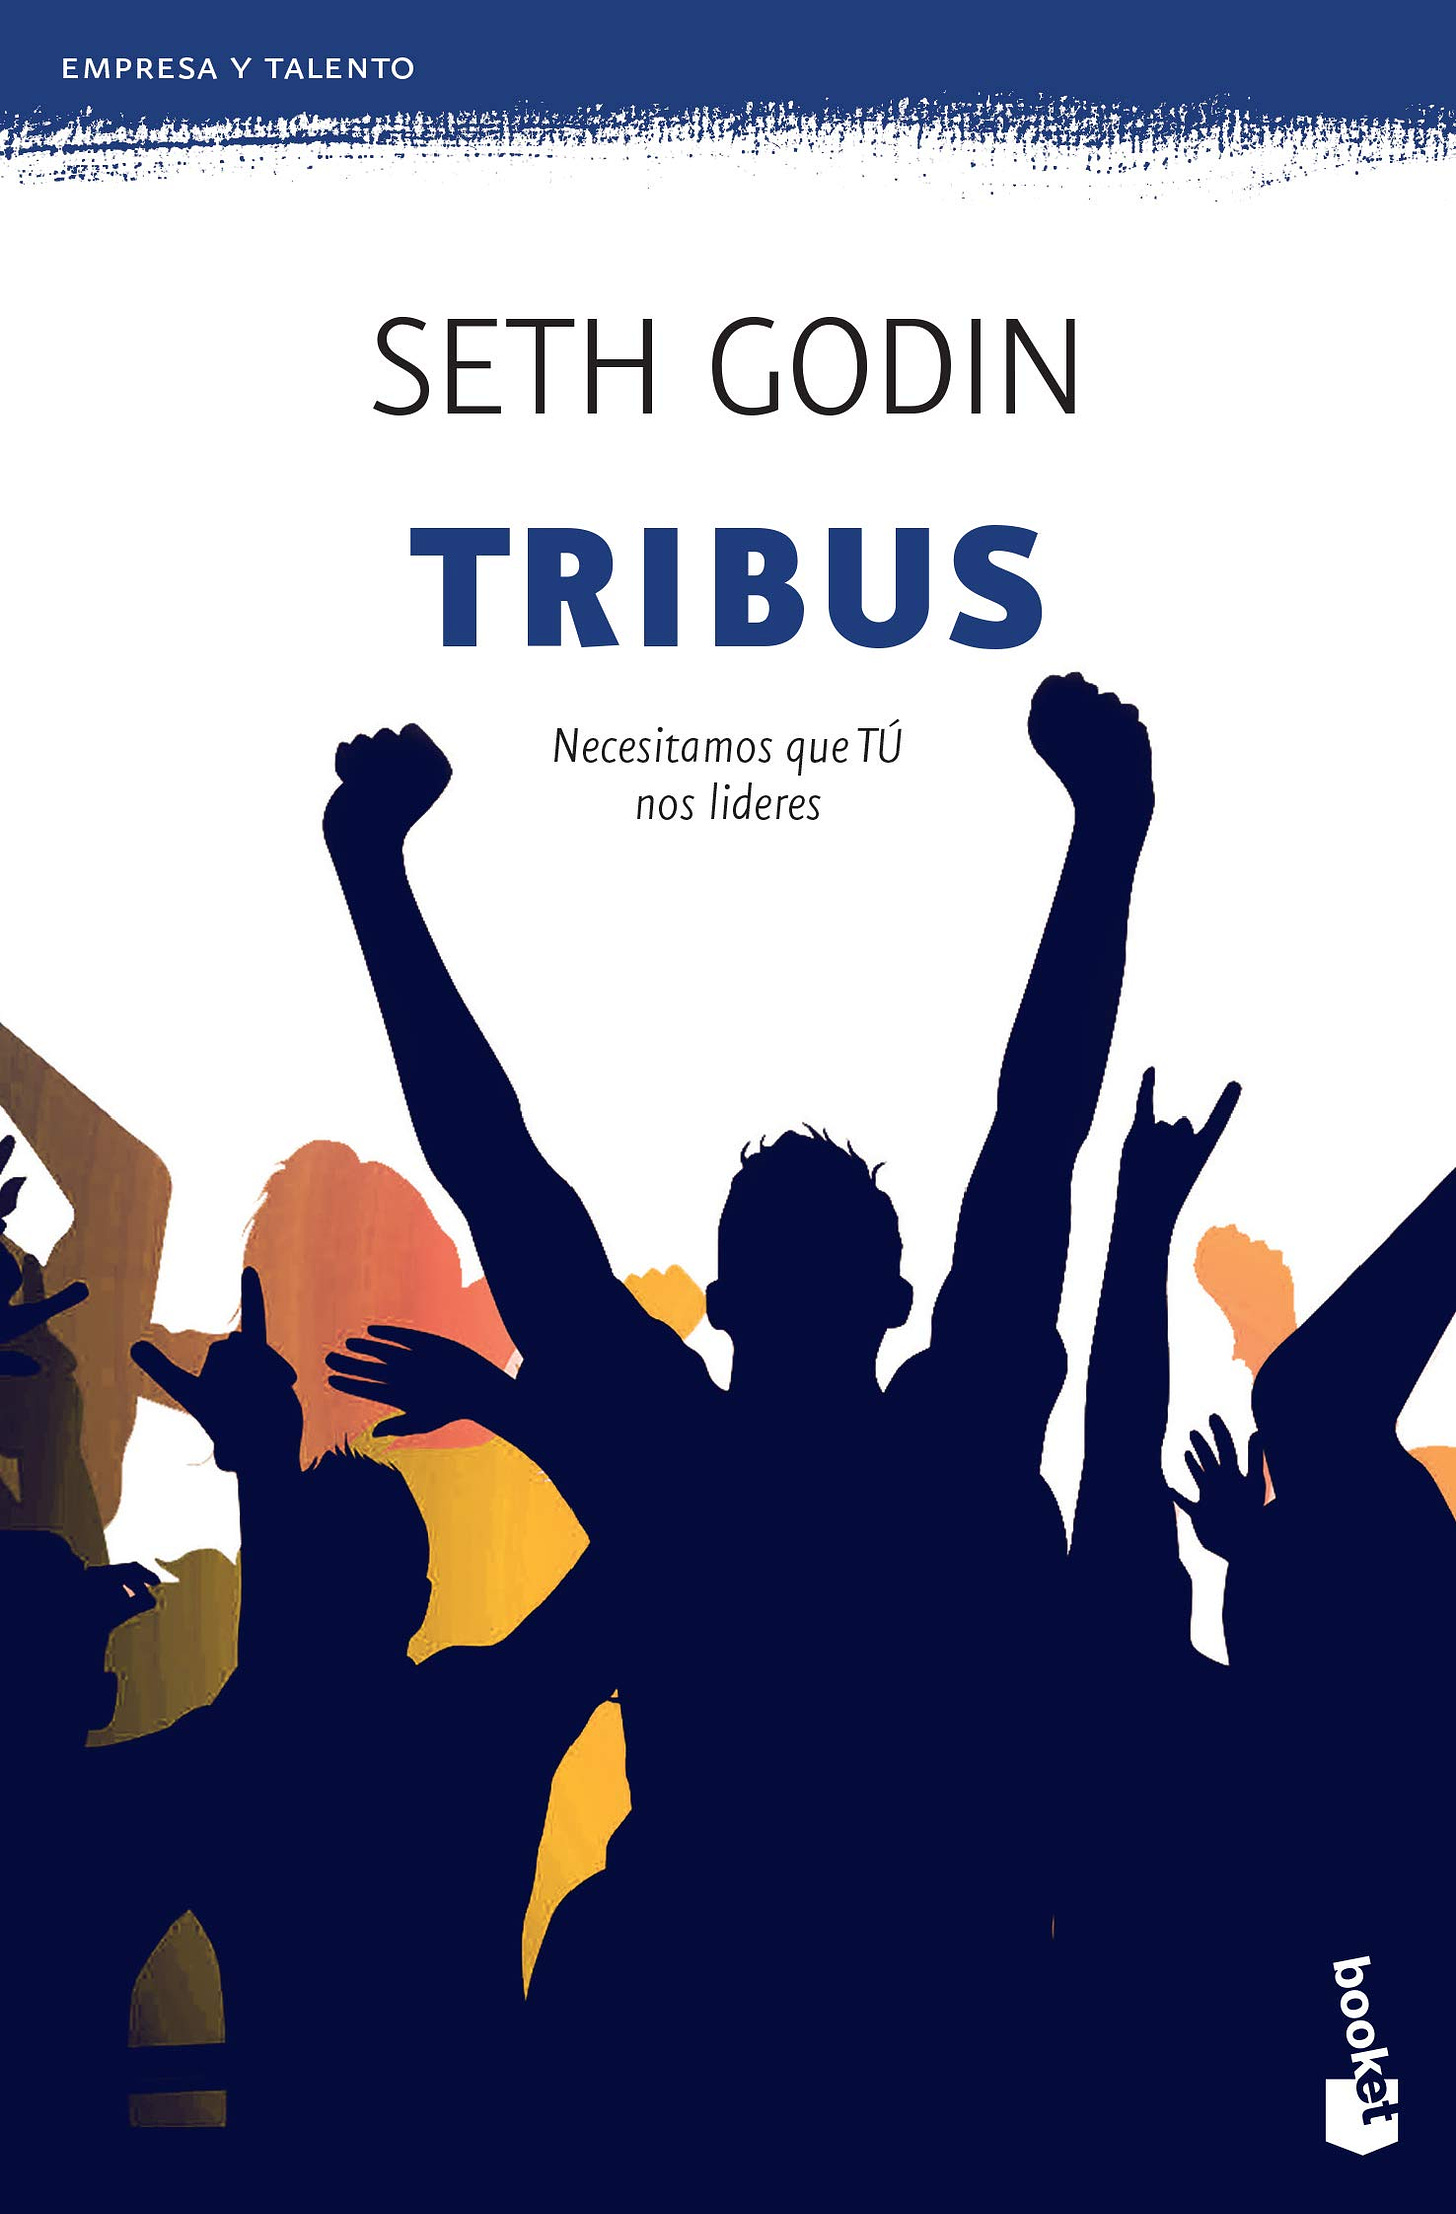 Tribus : Seth Godin: Amazon.com.mx: Libros